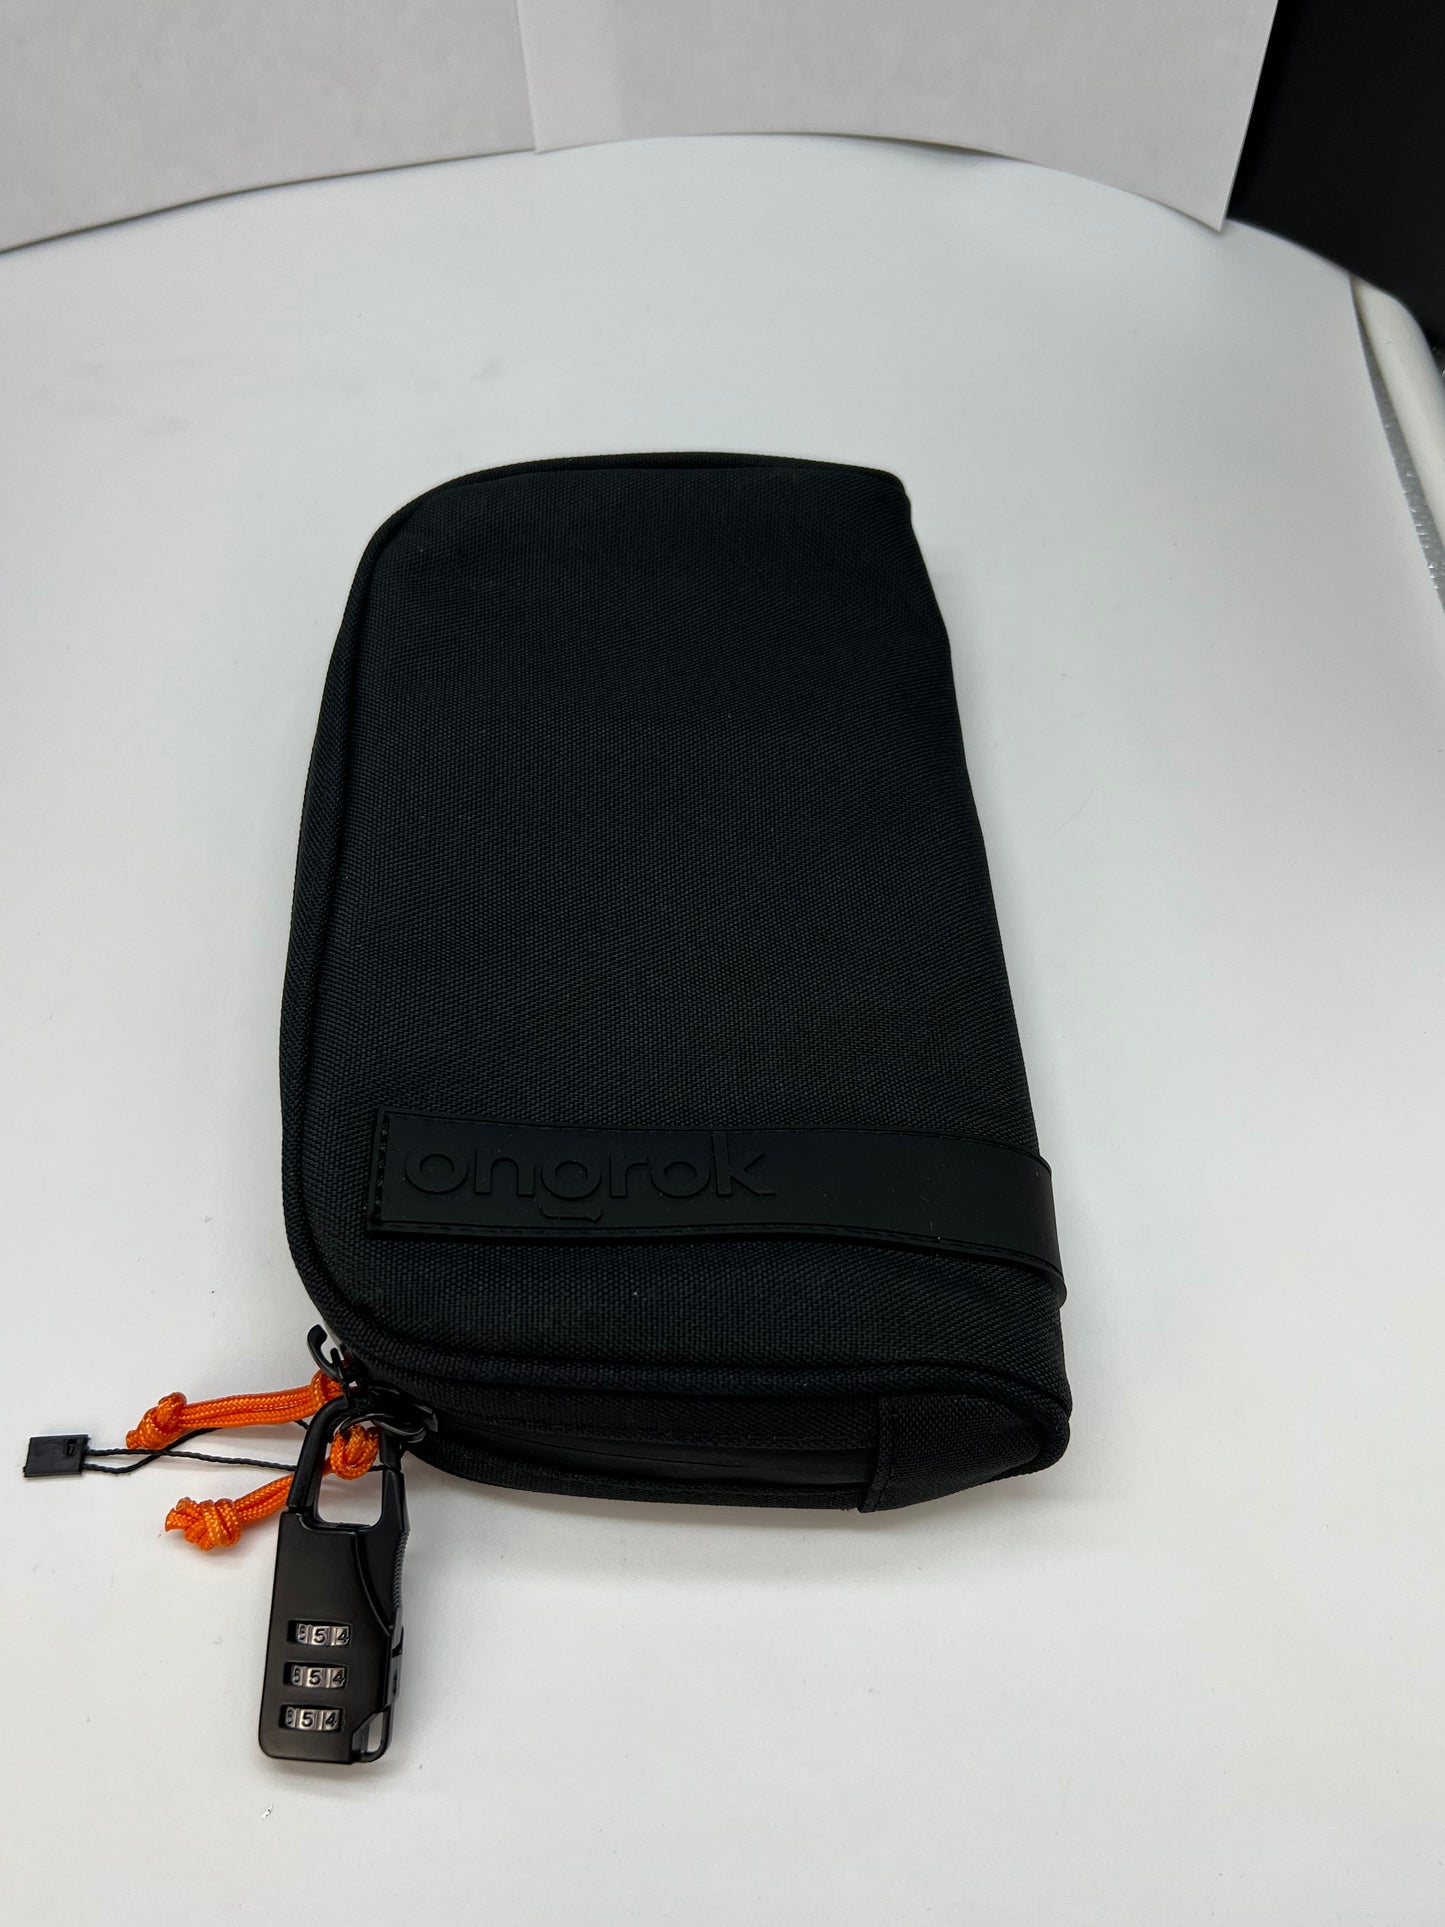 Ongrok - Smell Proof Wallet Medium 2.0